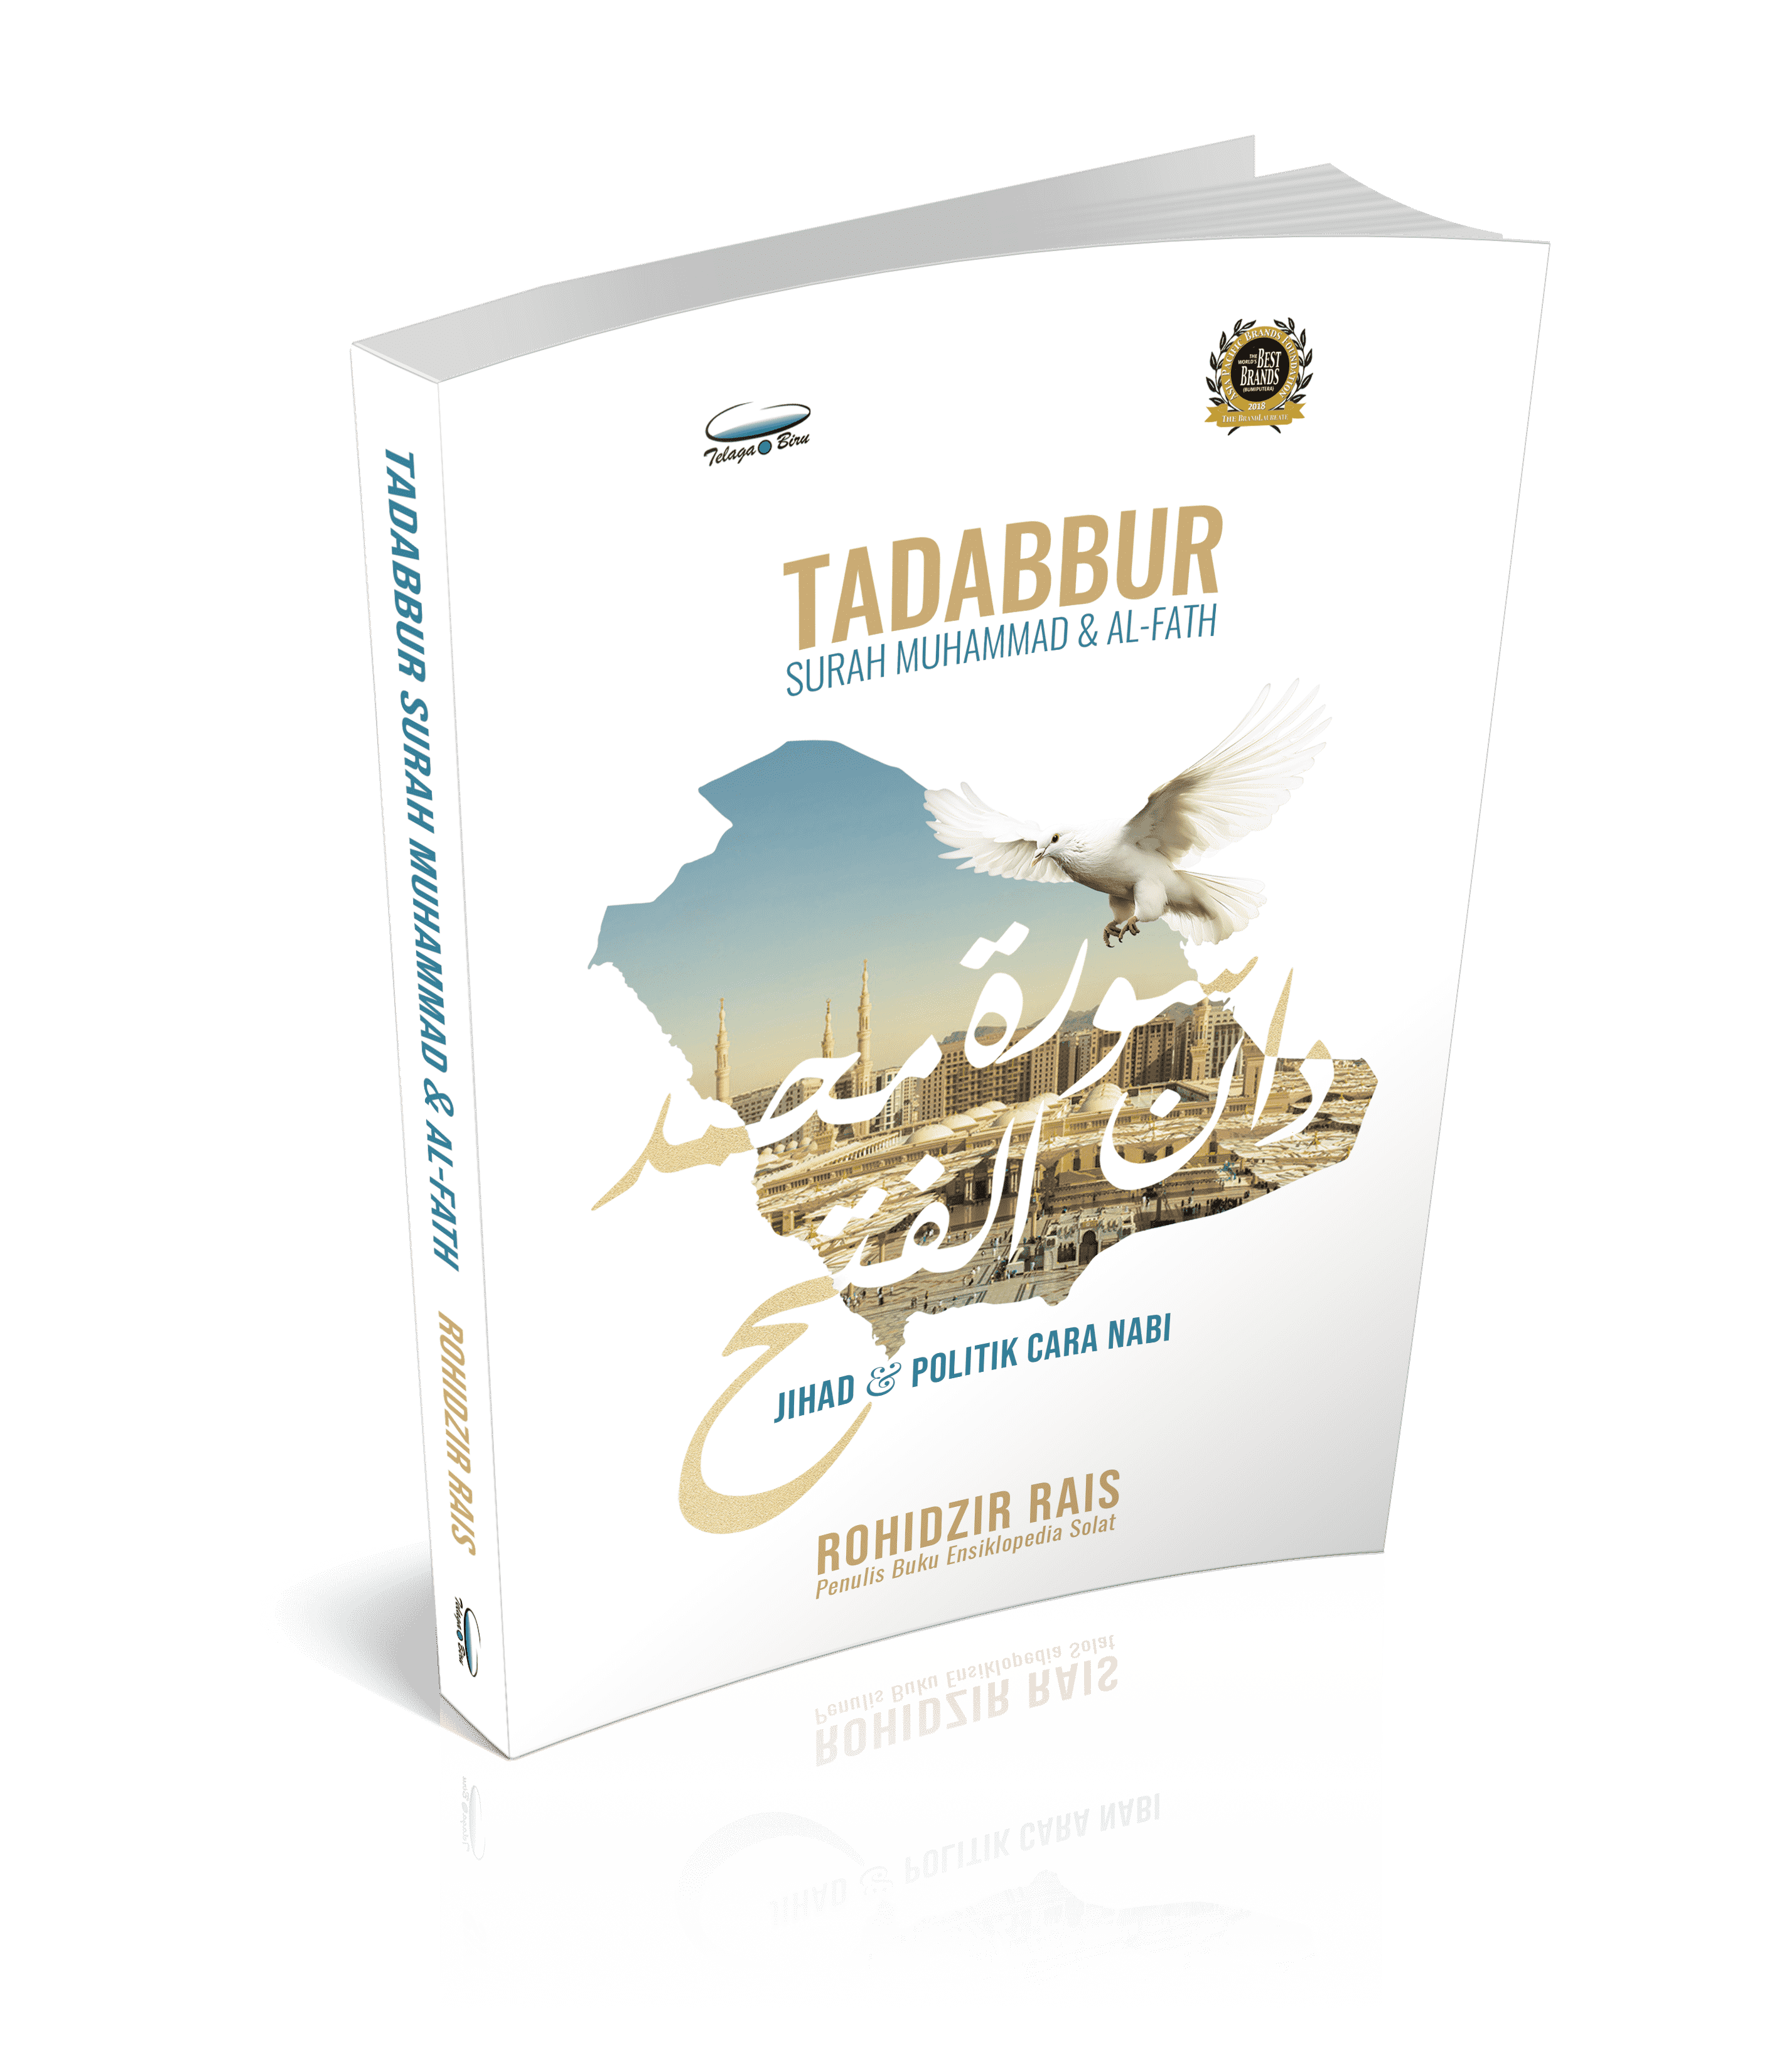 Tadabbur Surah Muhammad & Al-Fath - (TBBK1572)